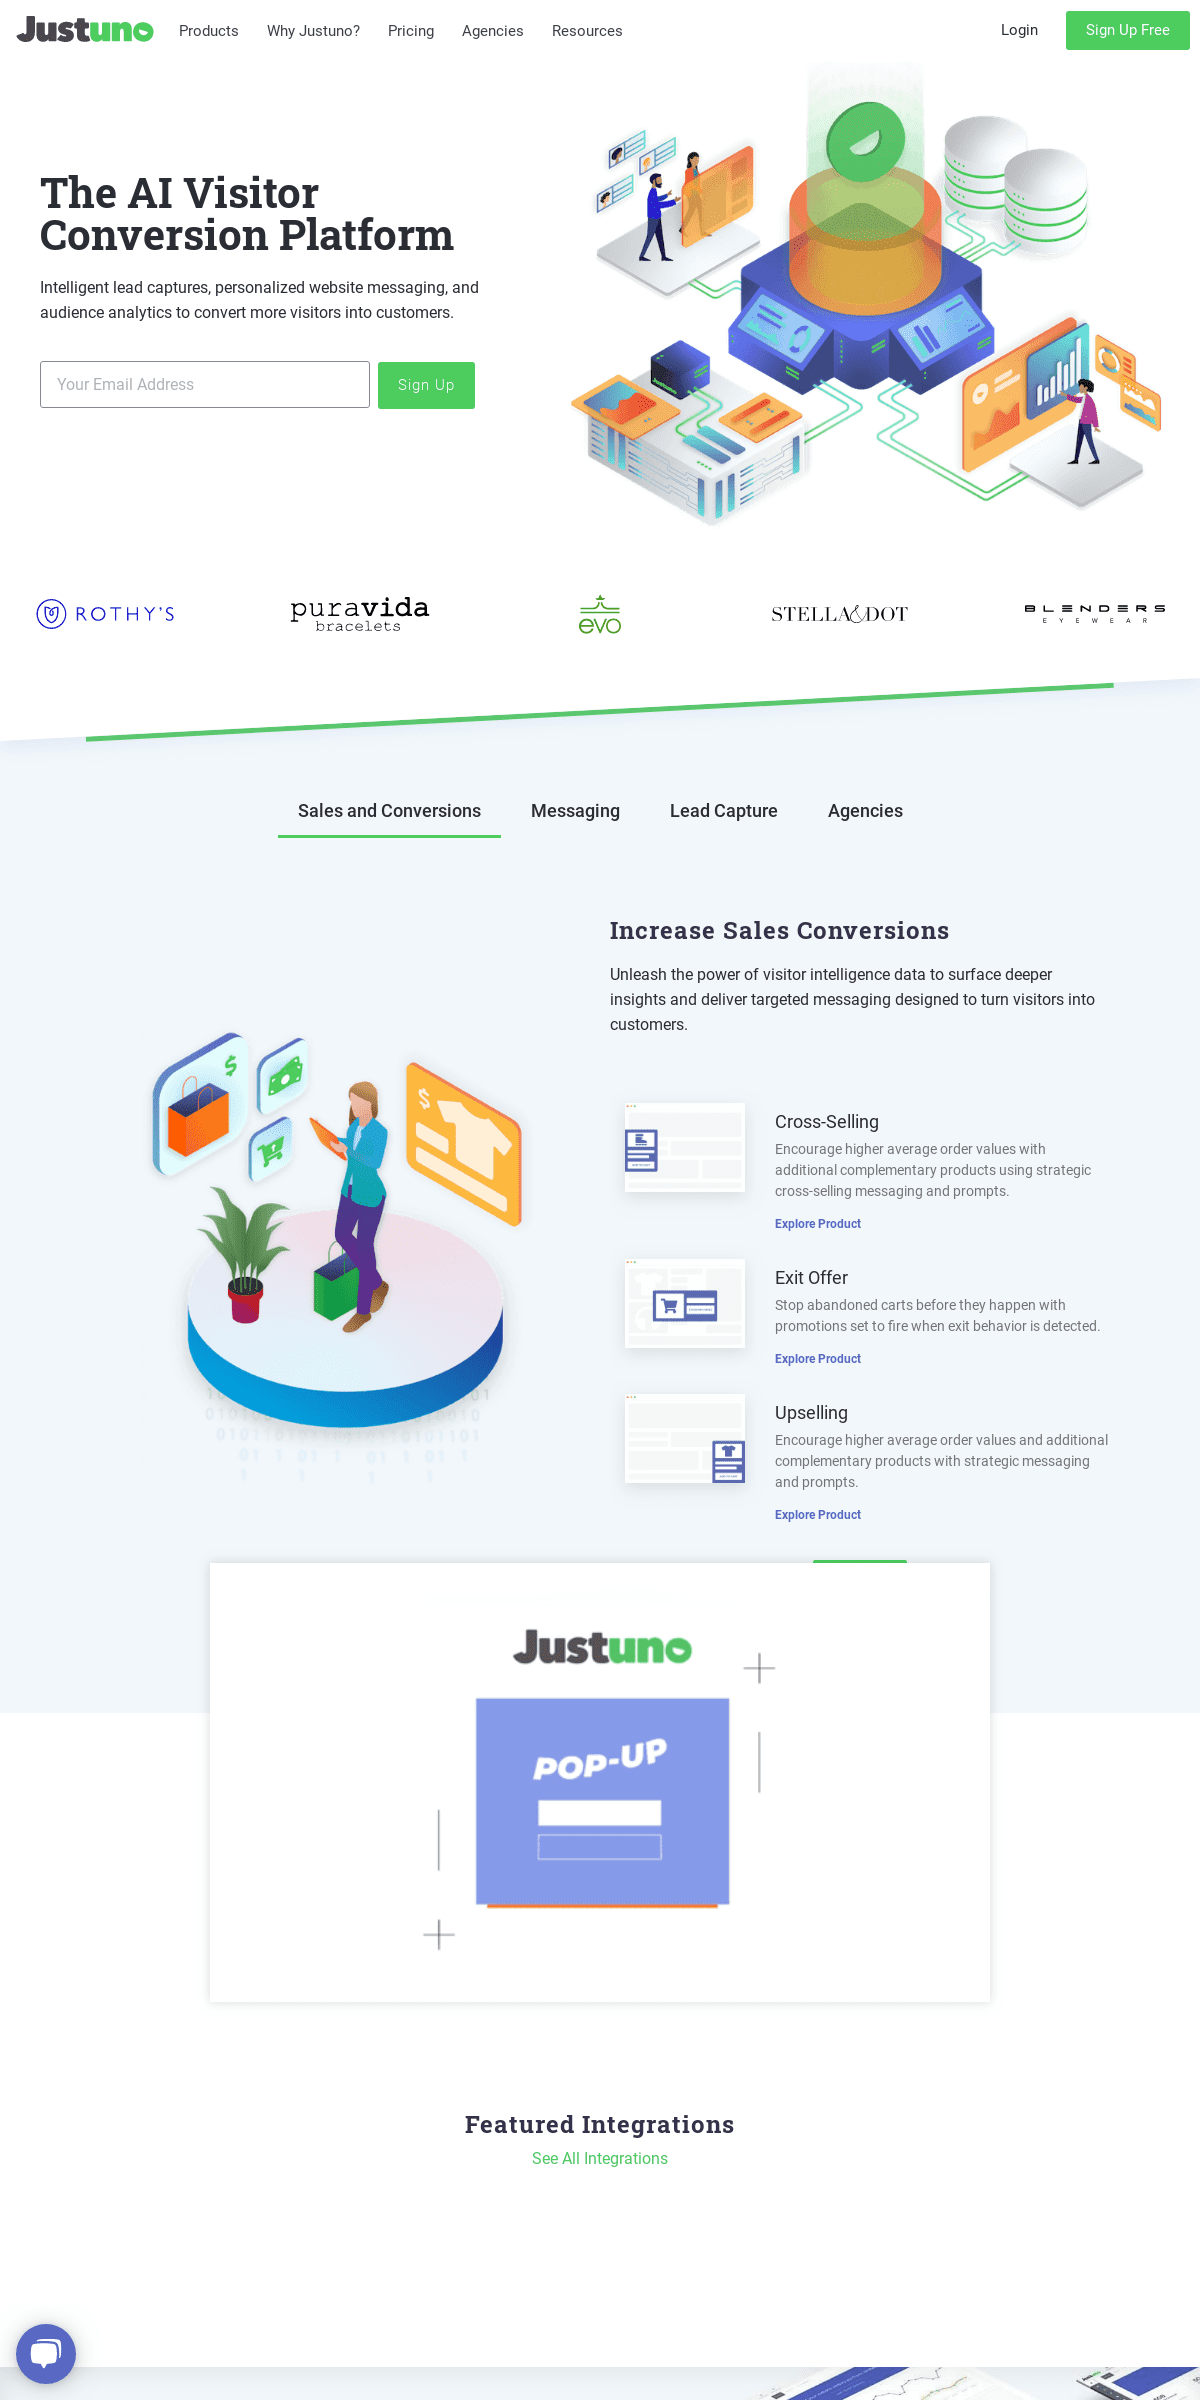 A complete backup of justuno.com